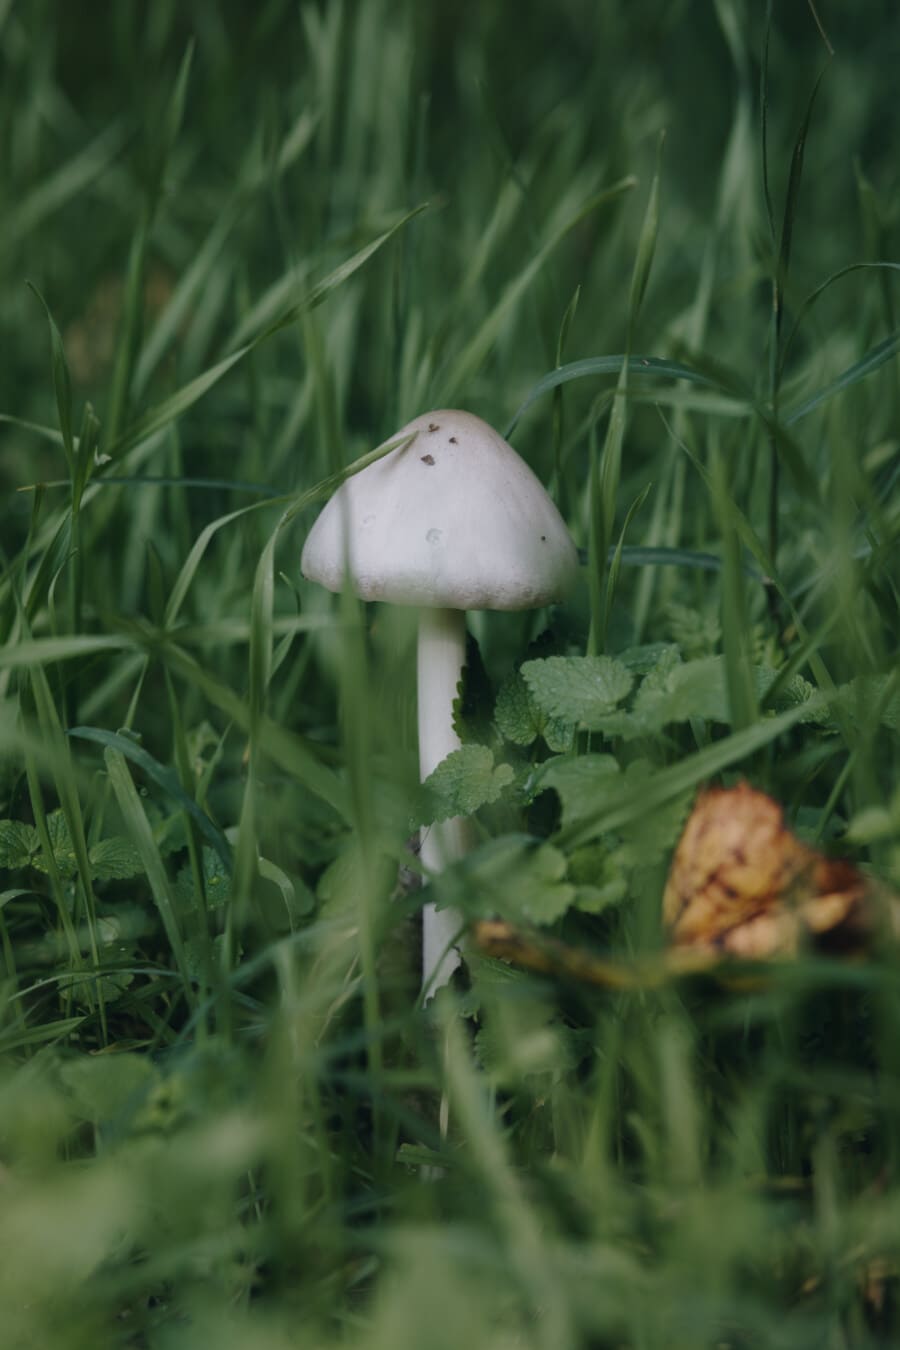 white, mushrooms, small, grass, lawn, grassland, nature, mushroom, fungus, outdoors